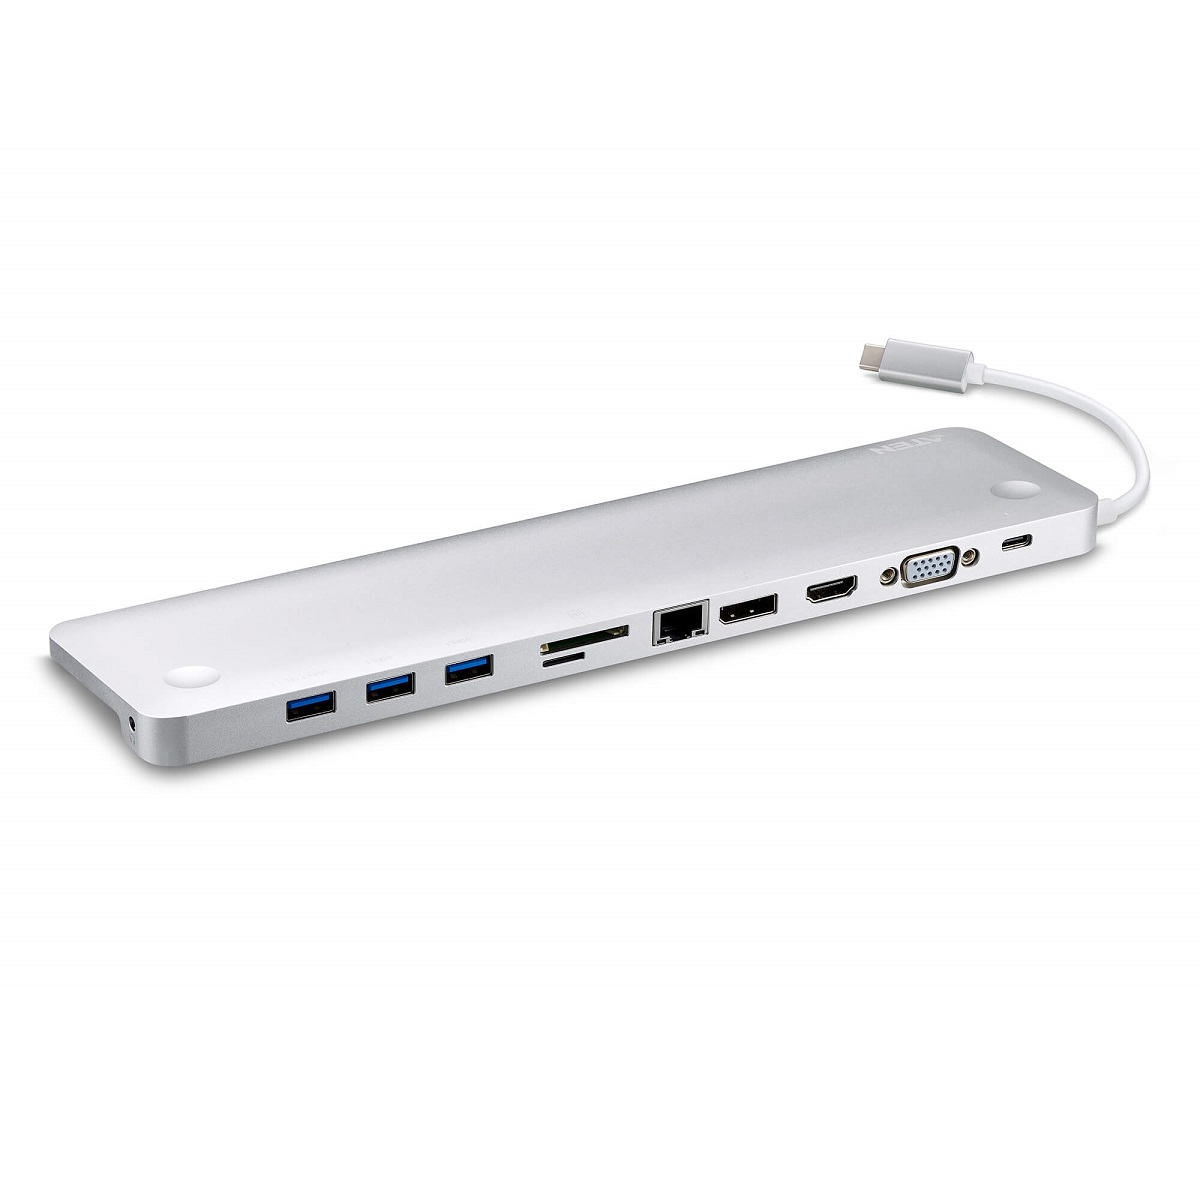 Aten Multiport Mini Dock USB-C, 3x USB 3.1 Gen 1 Ports, USB-C Power Pass through, DP/HDMI/VGA Display Ports, SD/MicroSD Slots, Gigabit Ethernet RJ45,